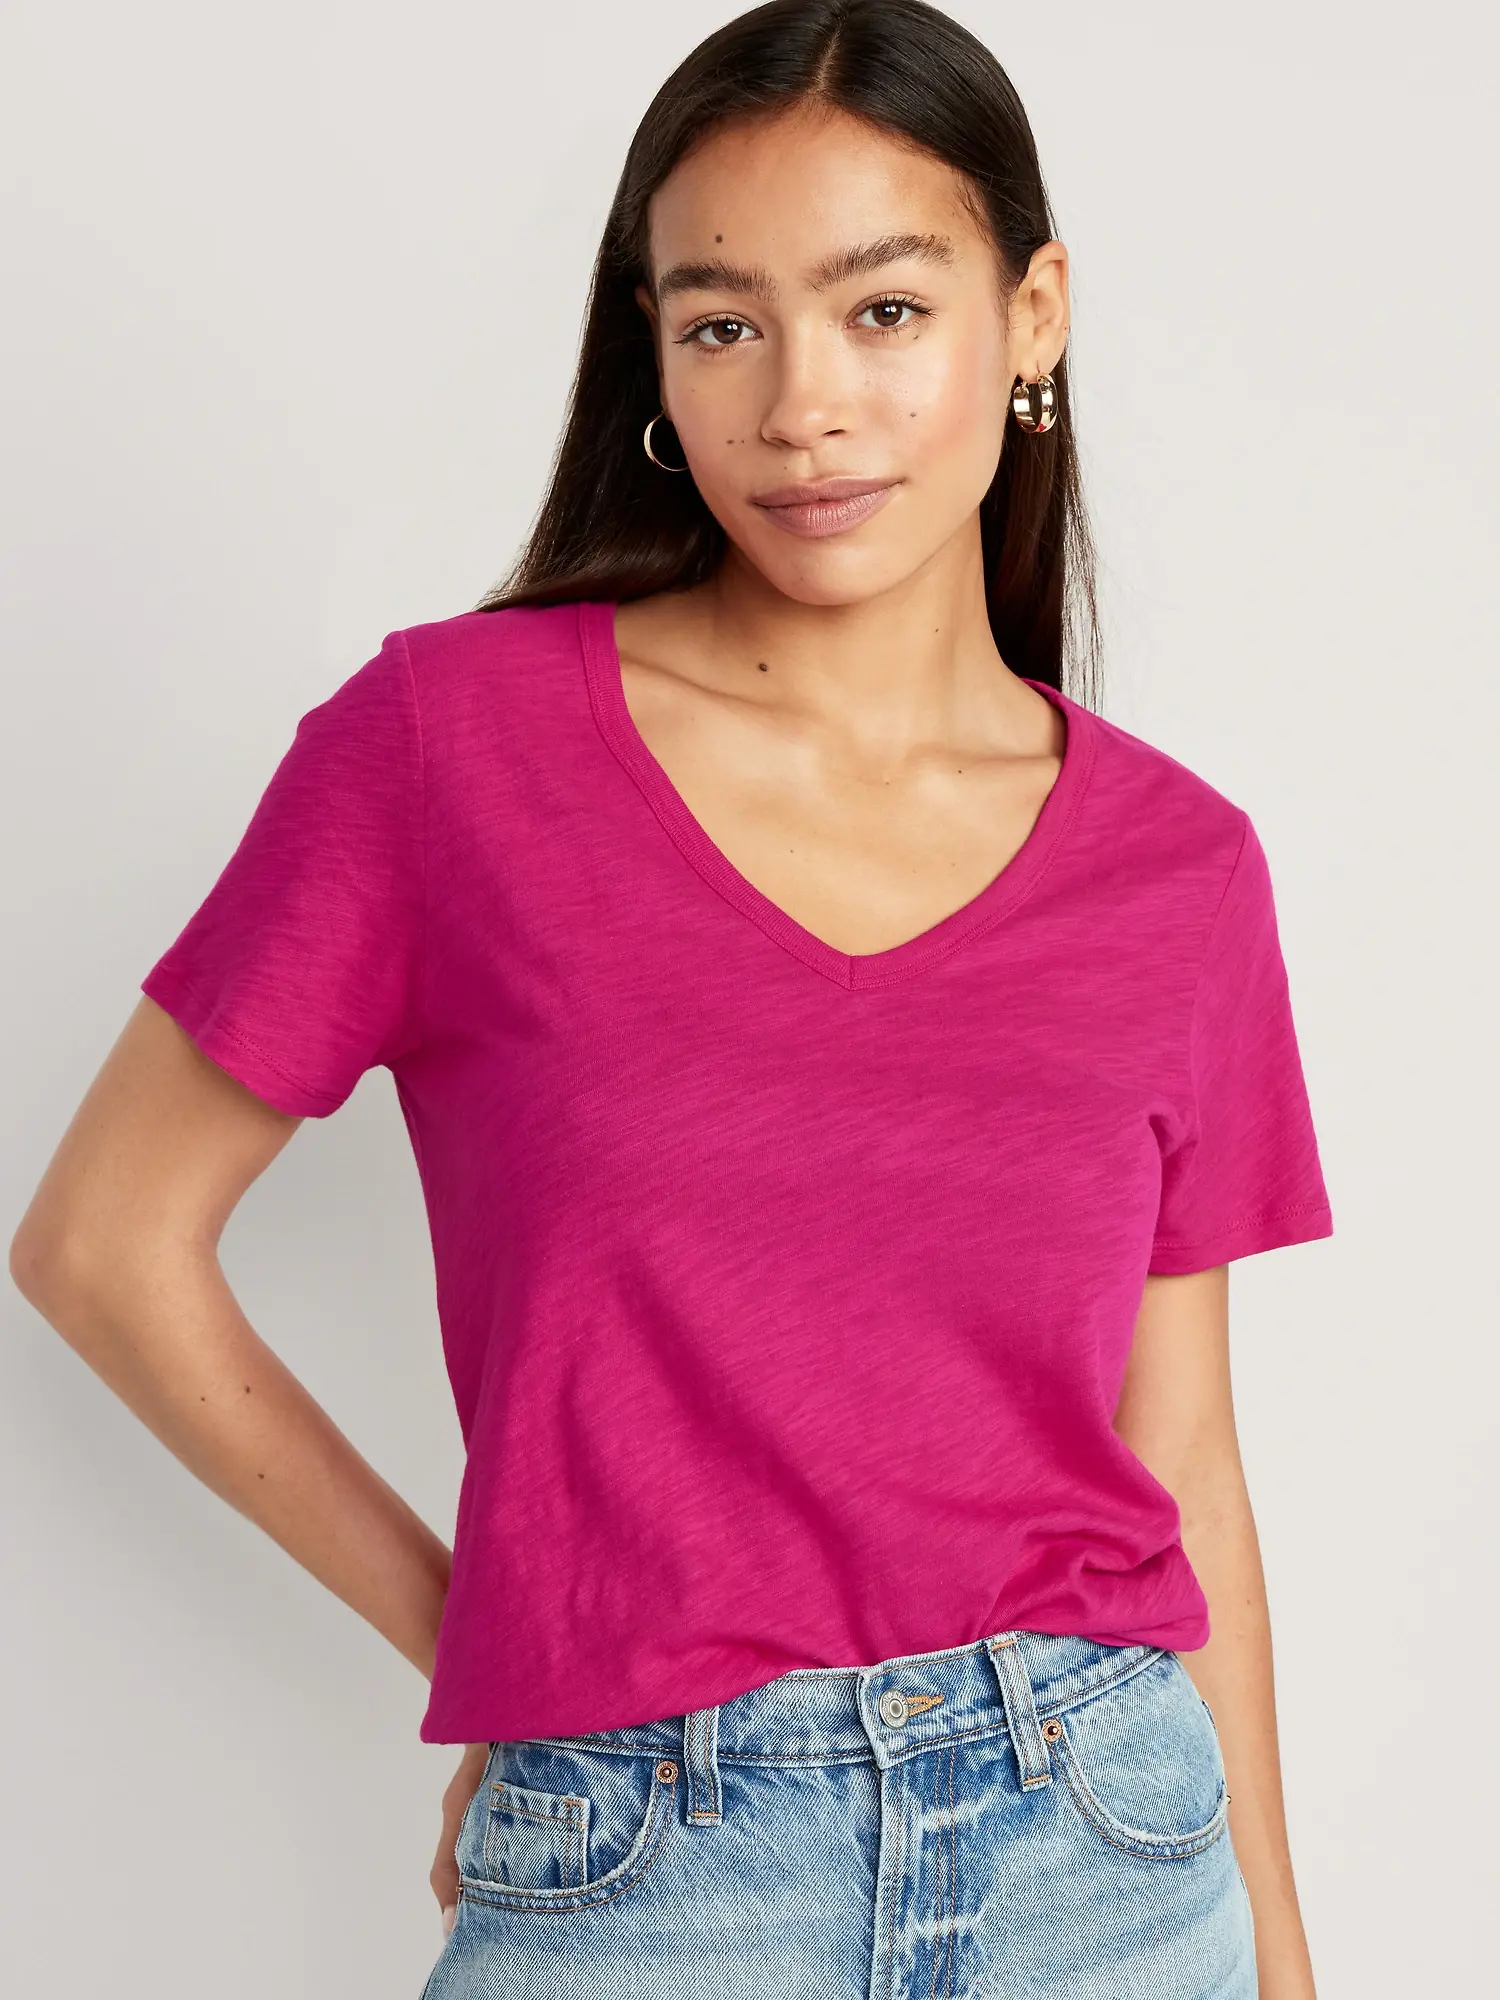 Old Navy EveryWear V-Neck Slub-Knit T-Shirt for Women pink. 1